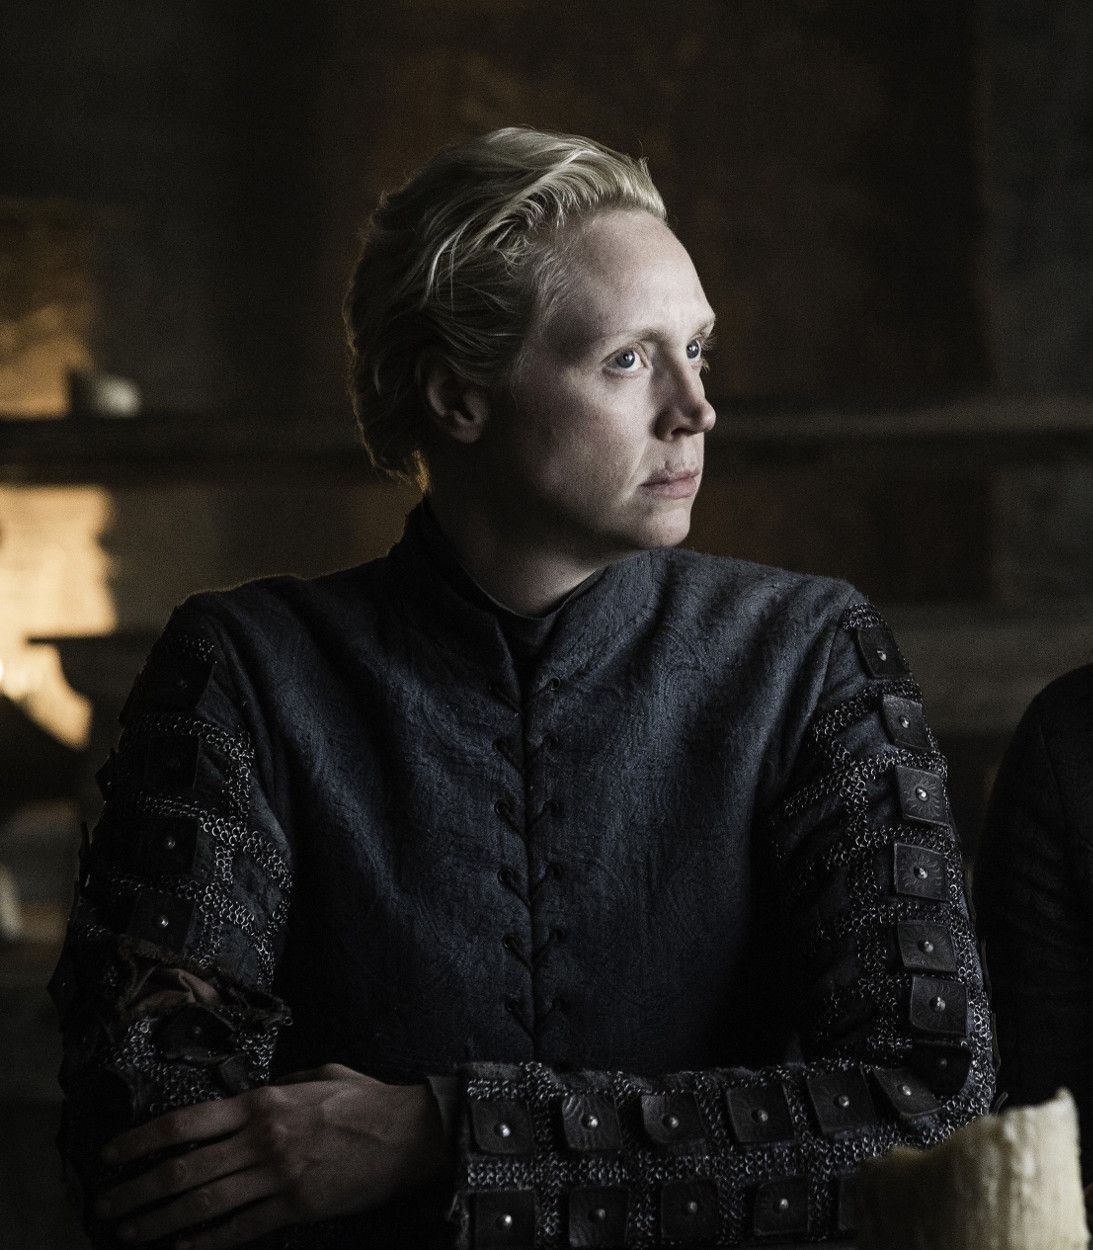 Gwendoline Christie As Brienne Of Tarth In Game Of Thrones